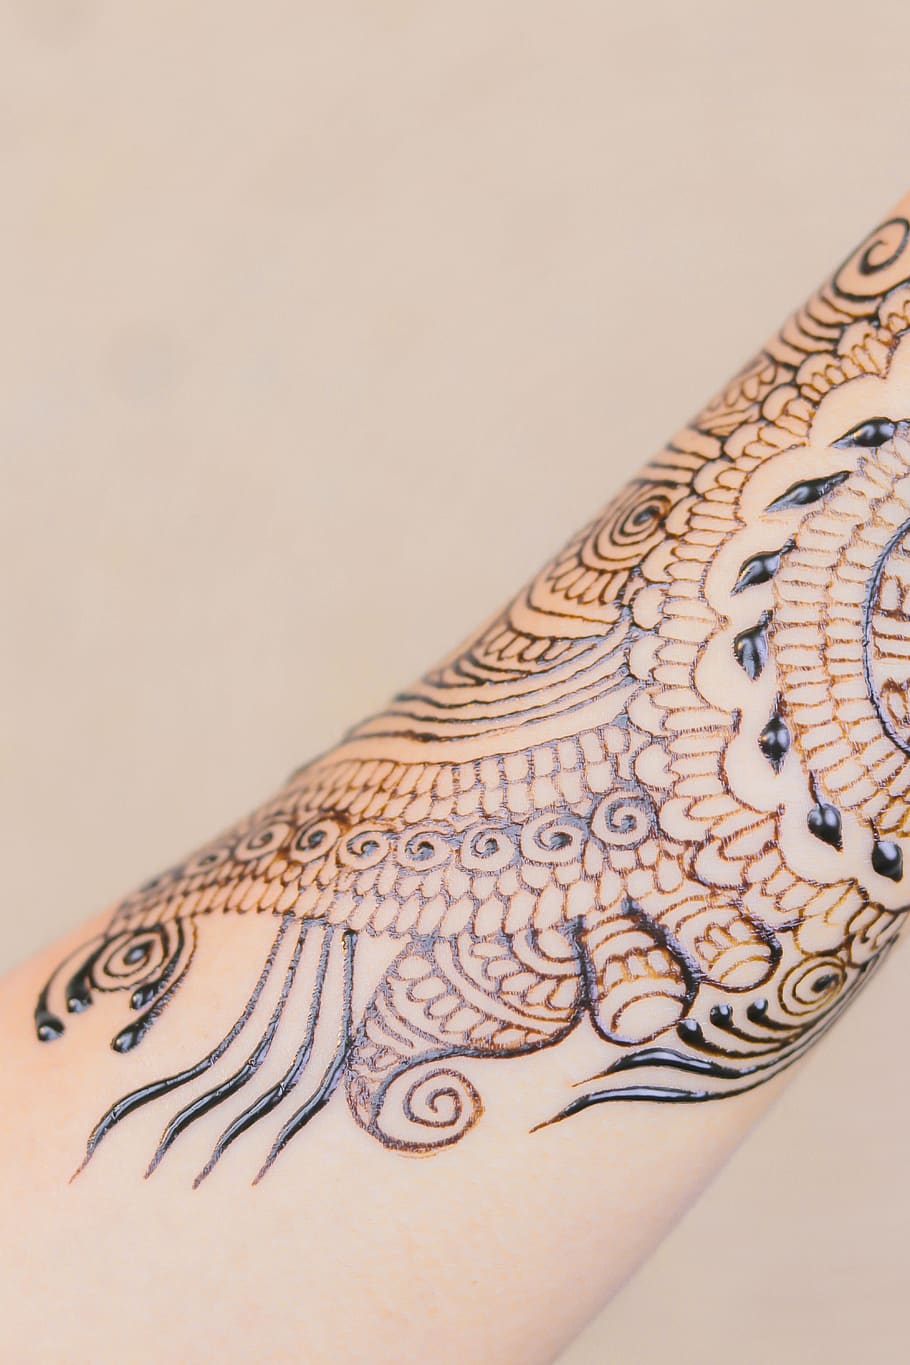 henna, novia, boda, cultura, moda, matrimonio, mujer, mehendi, tradicional, ritual